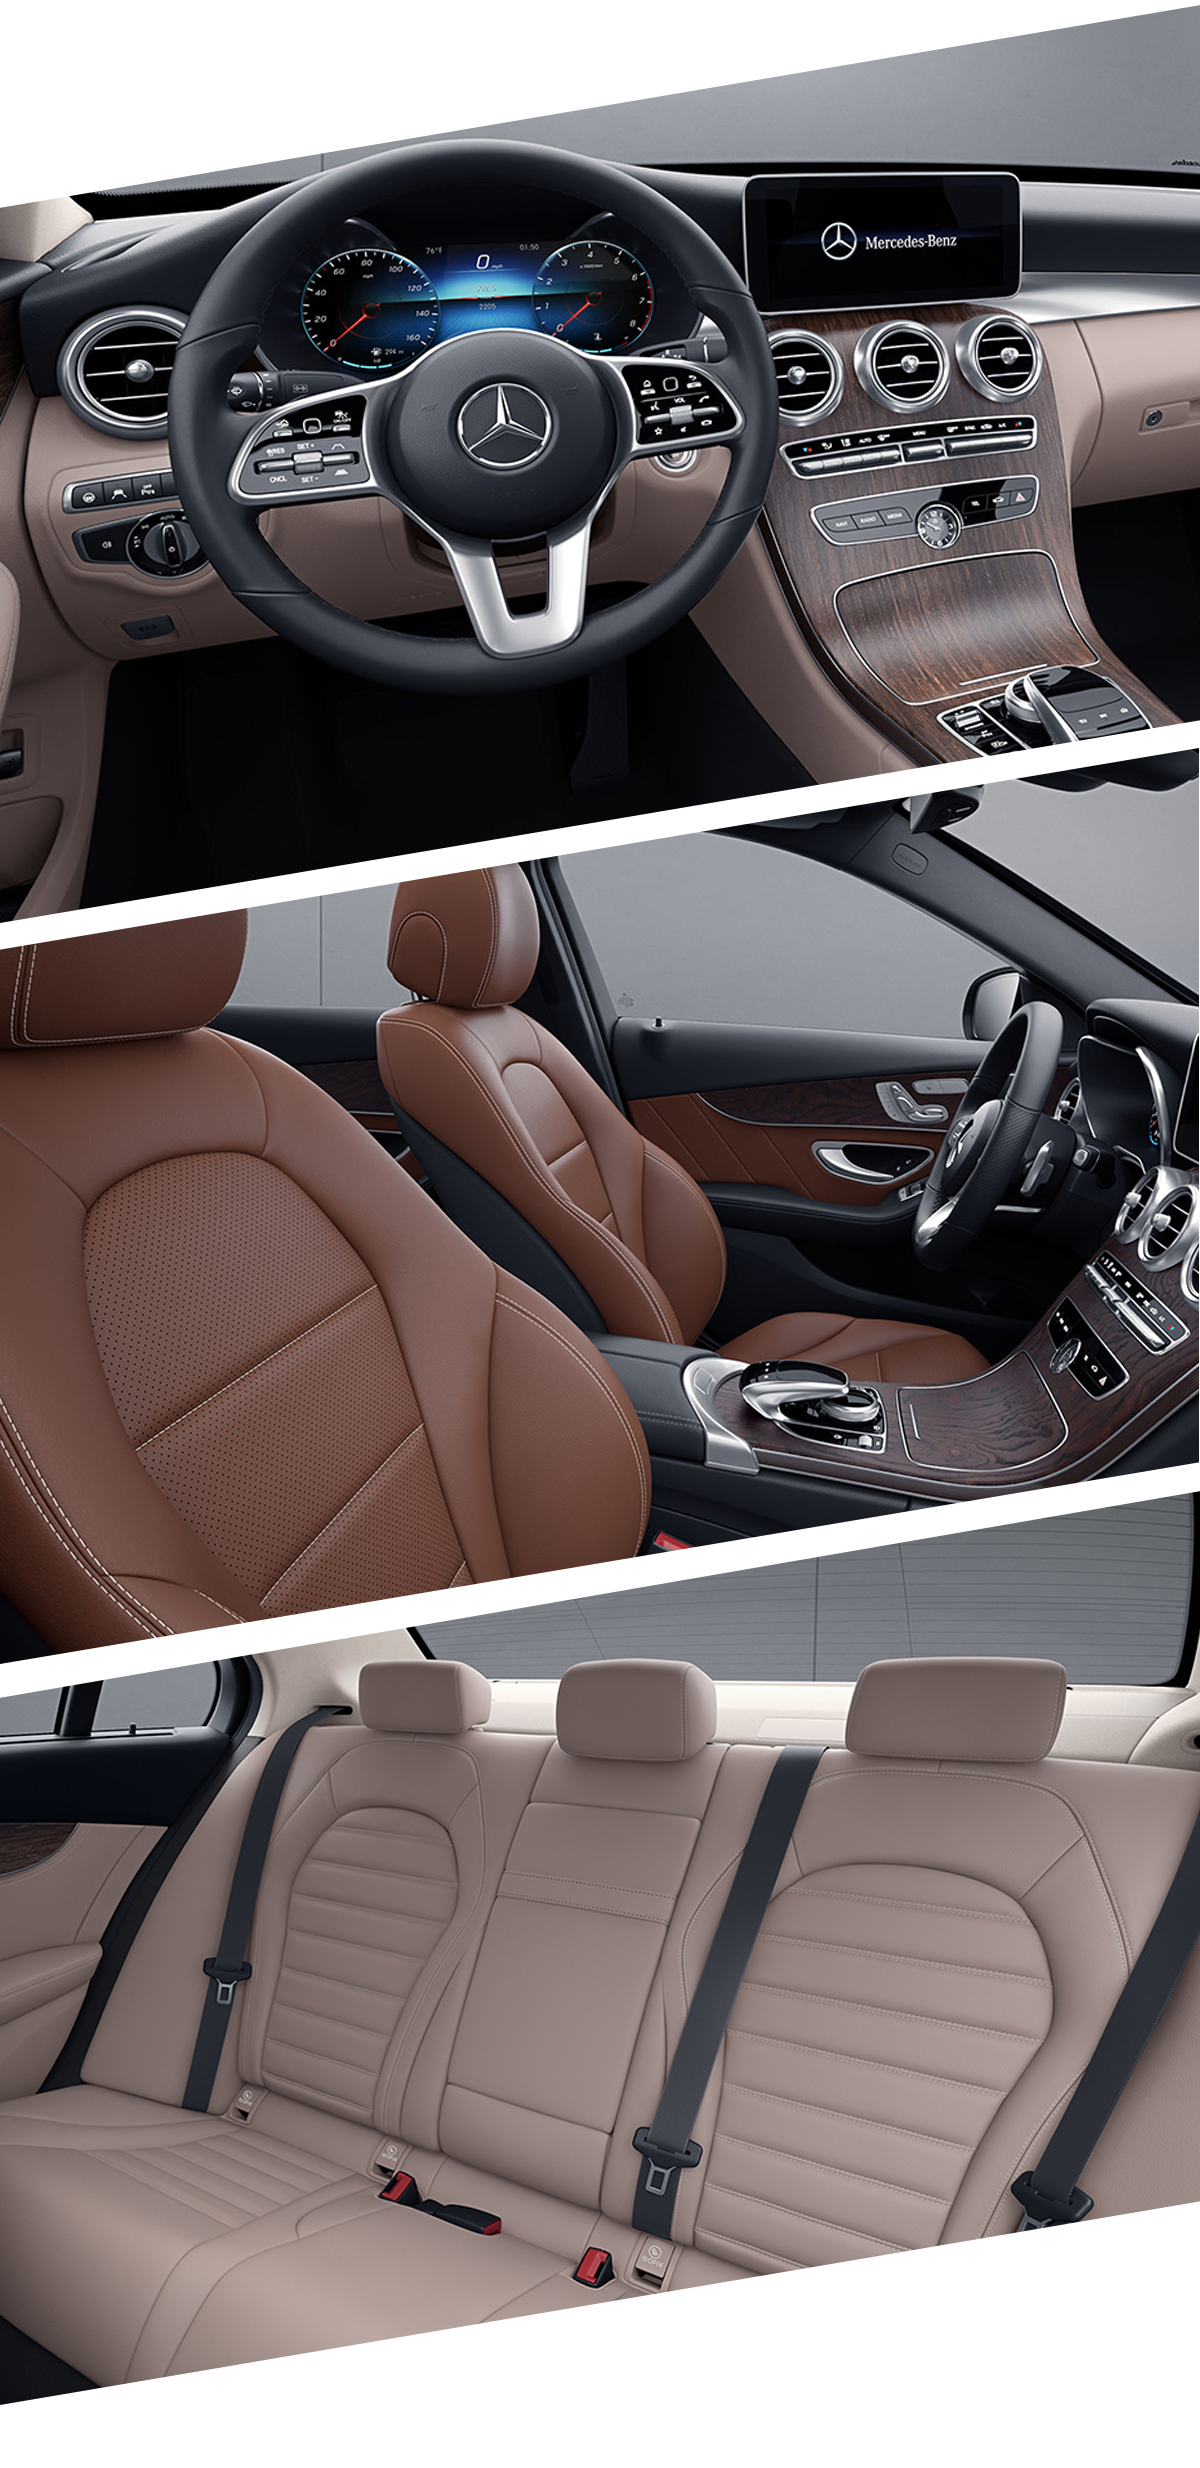 2021 Mercedes-Benz C-Class Interior Images